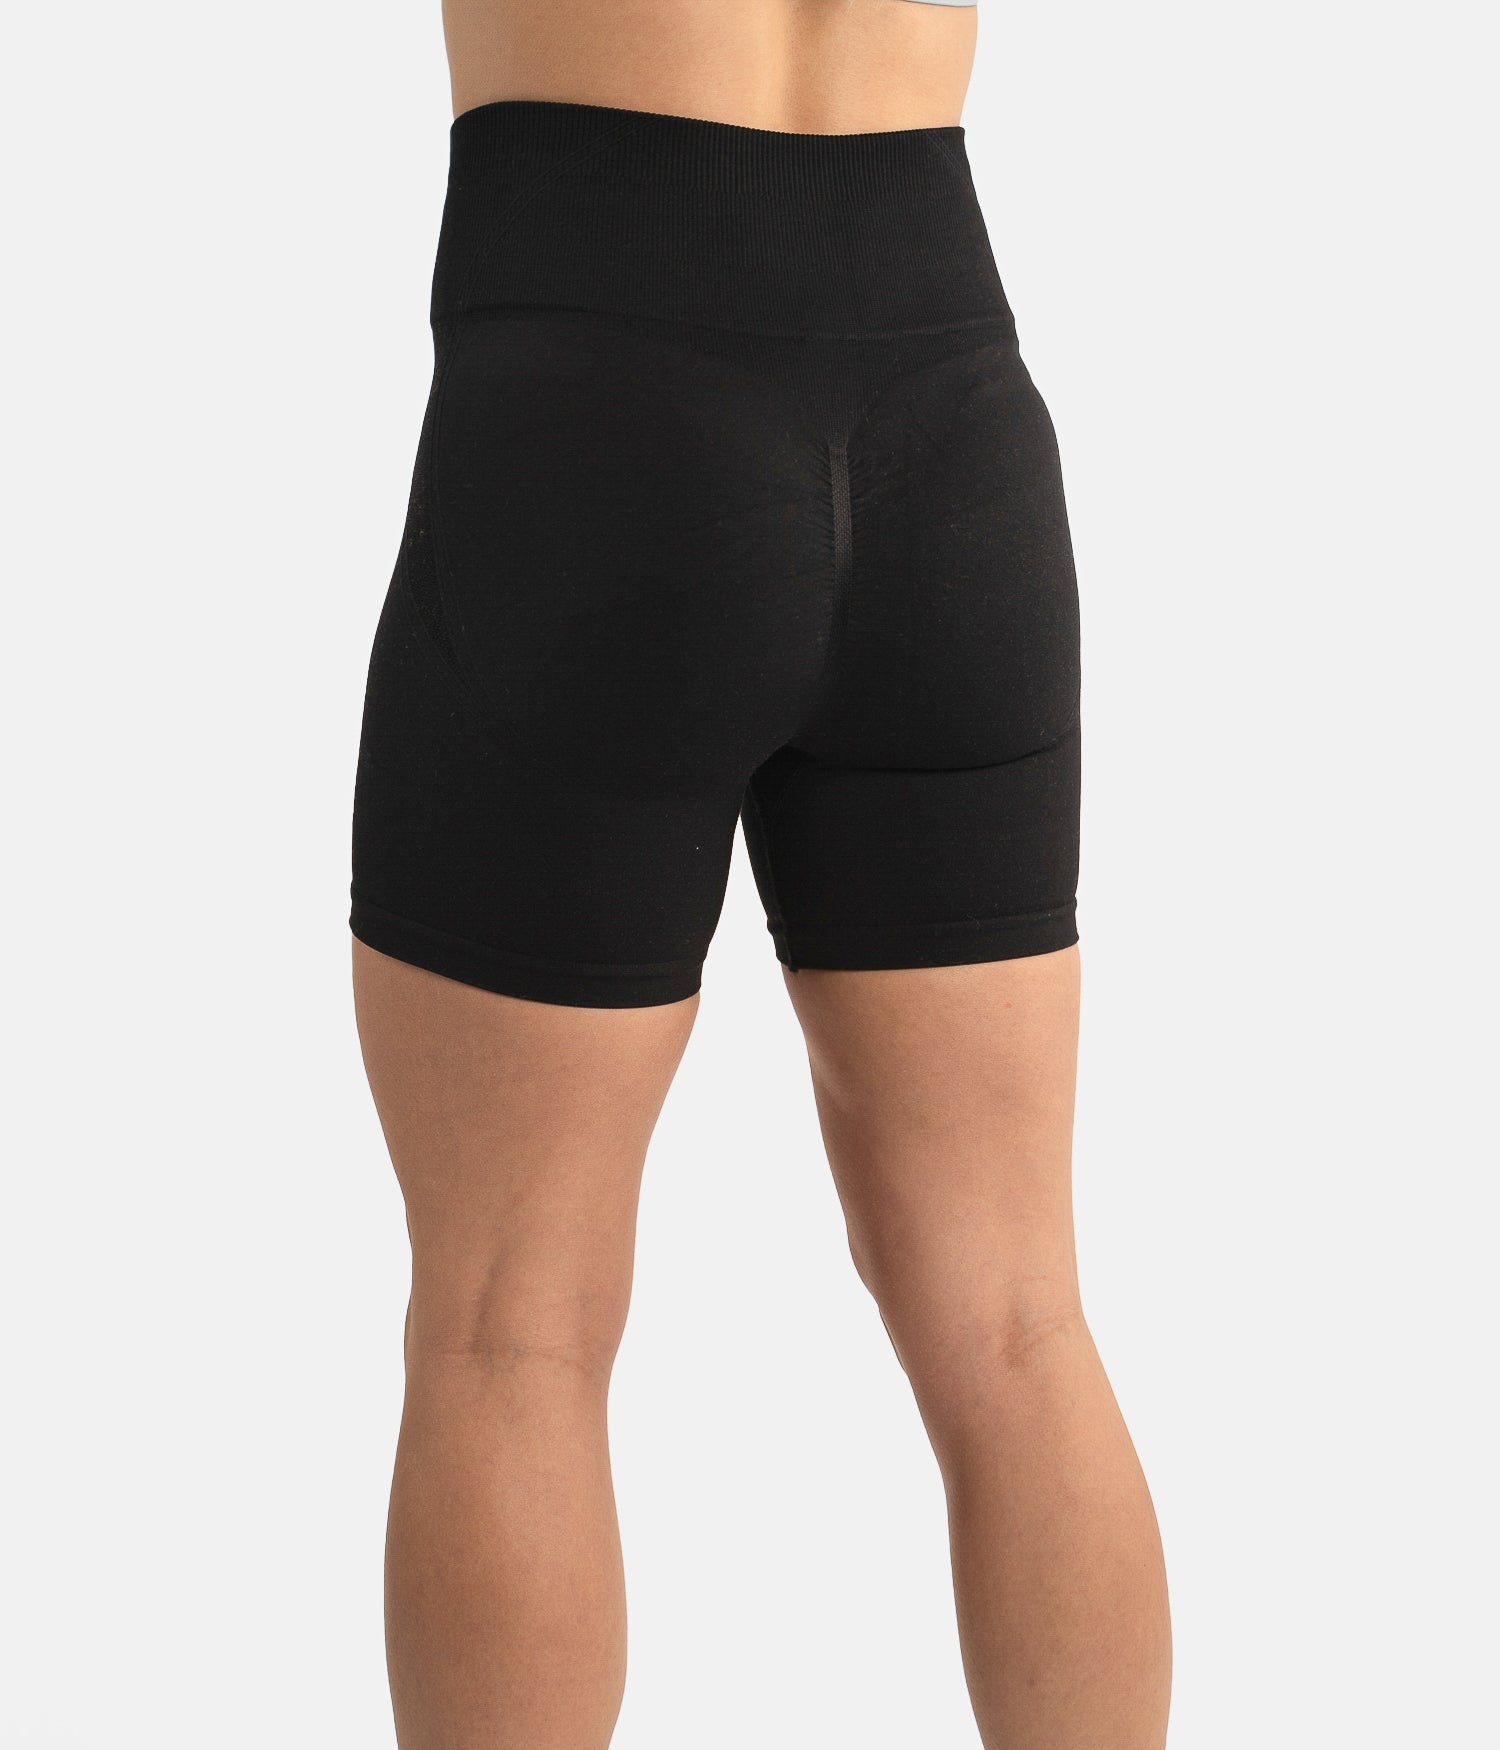 Ladies Pro Seamless Grappling Shorts - Black